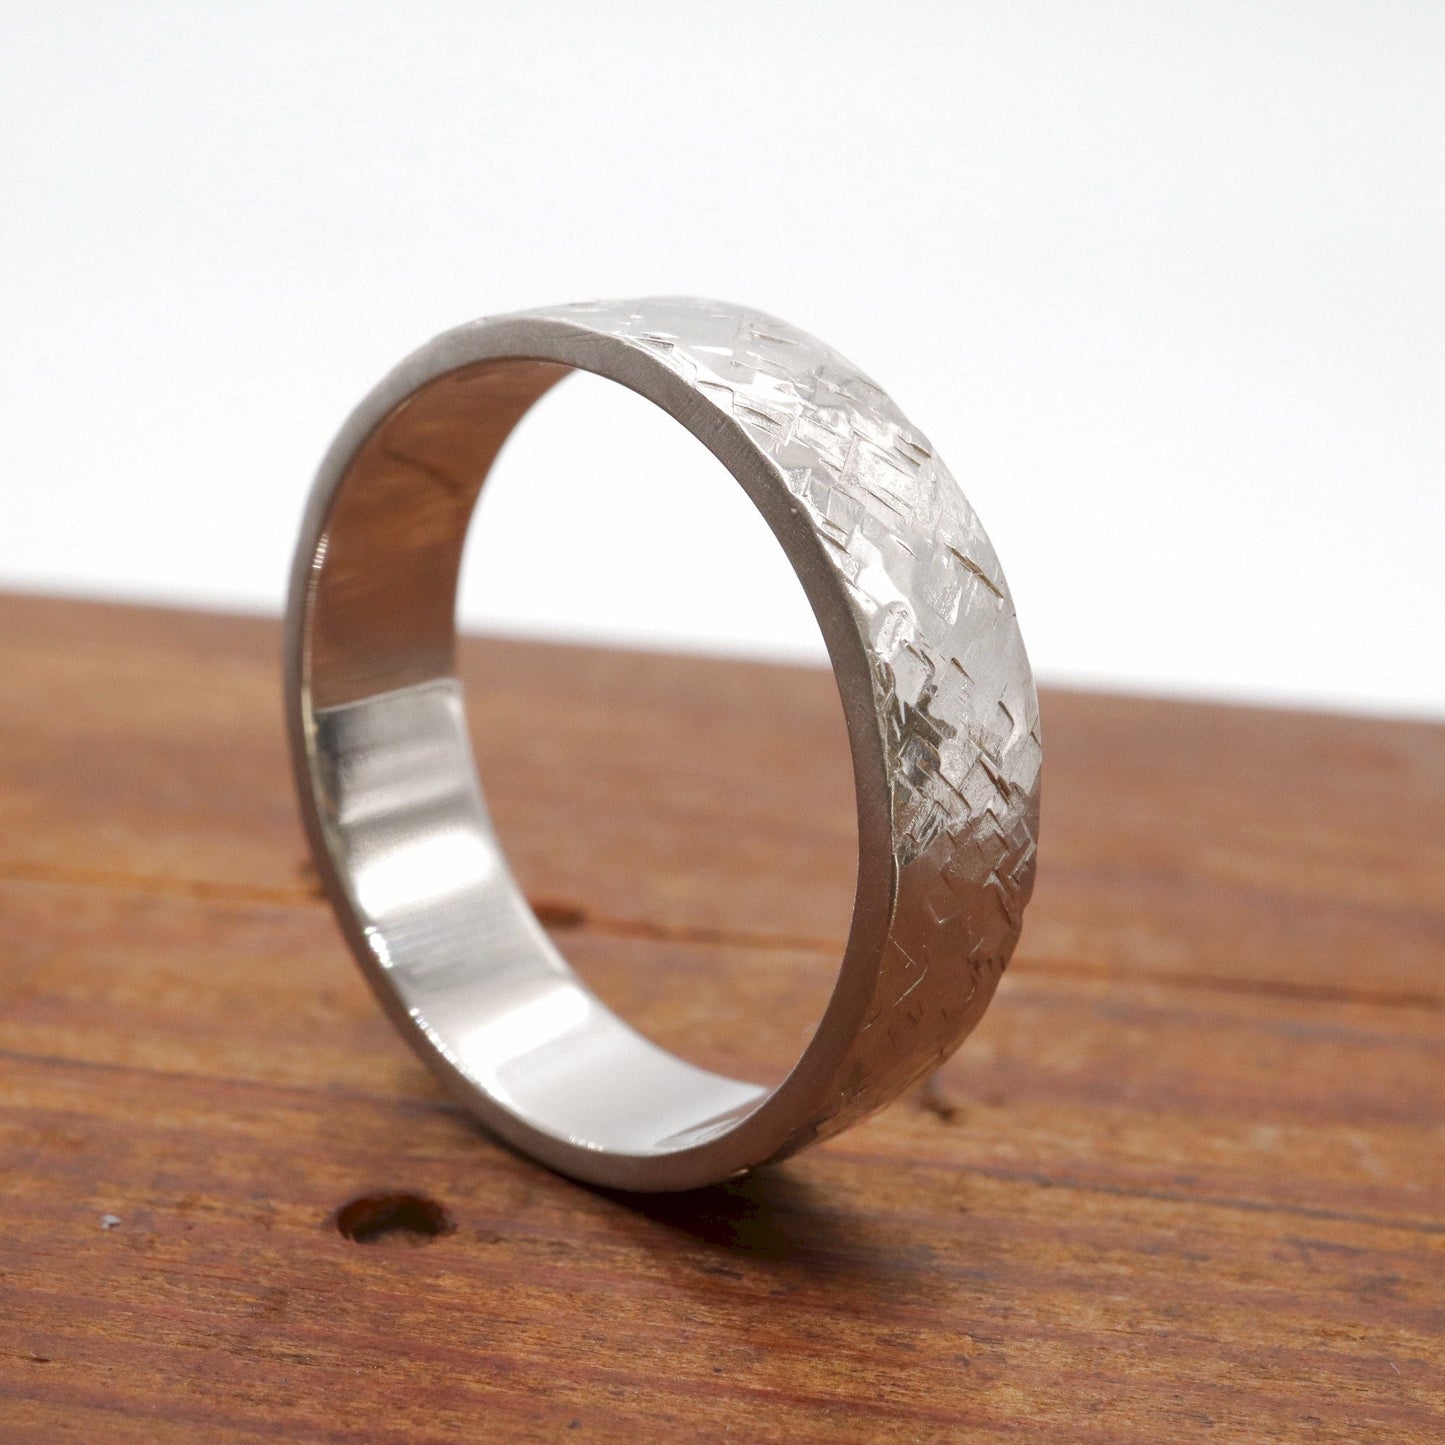 Broad silver wedding ring, Kendal flat rustic hammered design